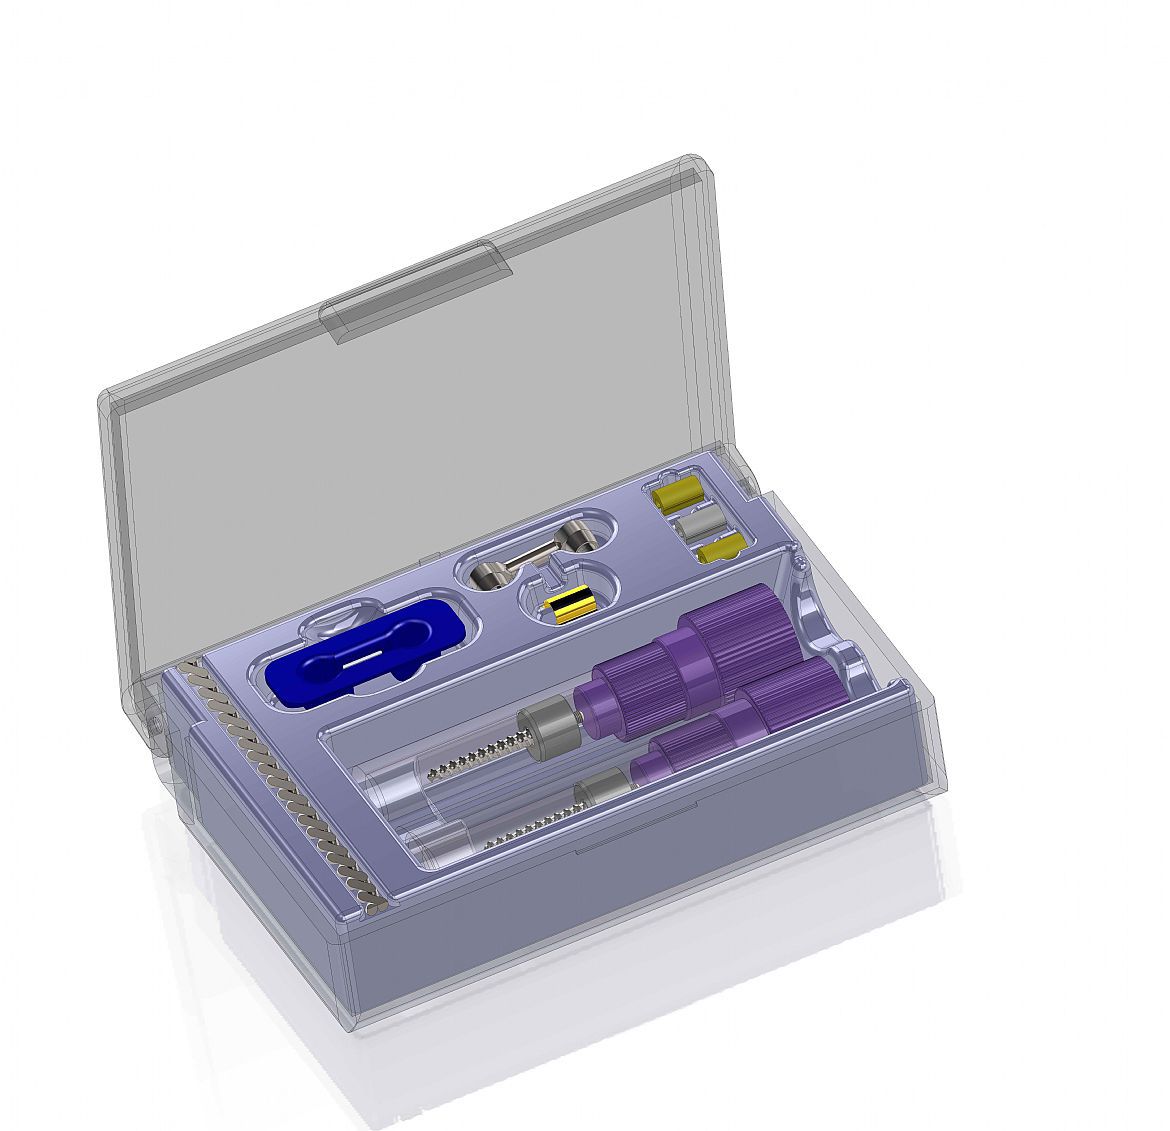 Implantology instrument kit Easy2Fix PCFX-1320 Cortex-Dental Implants Industries Ltd.